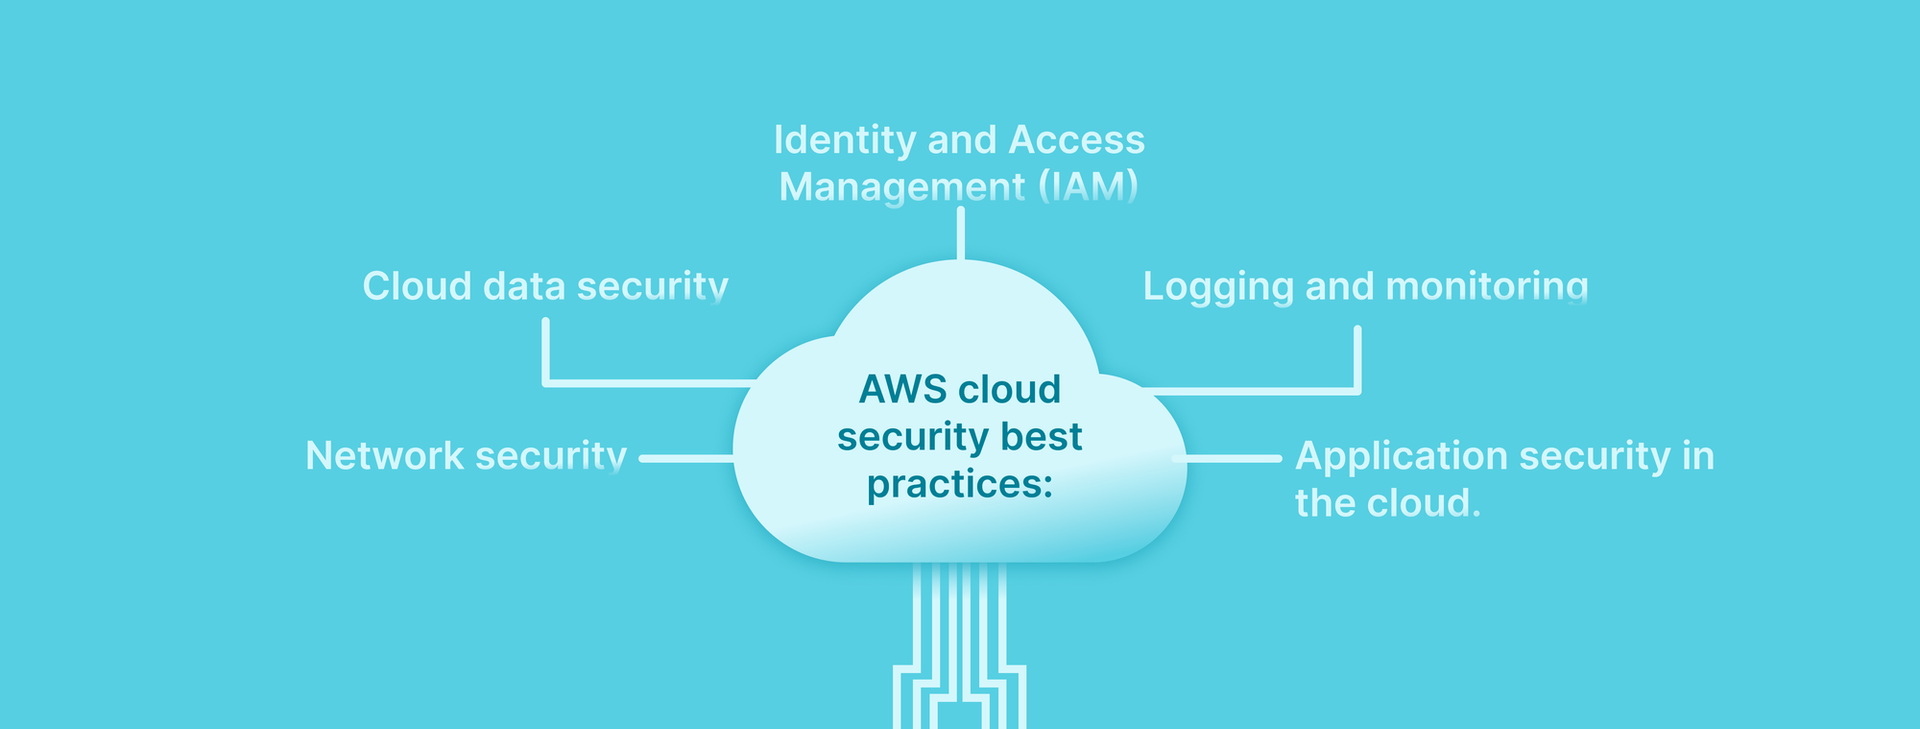 AWS cloud security best practices